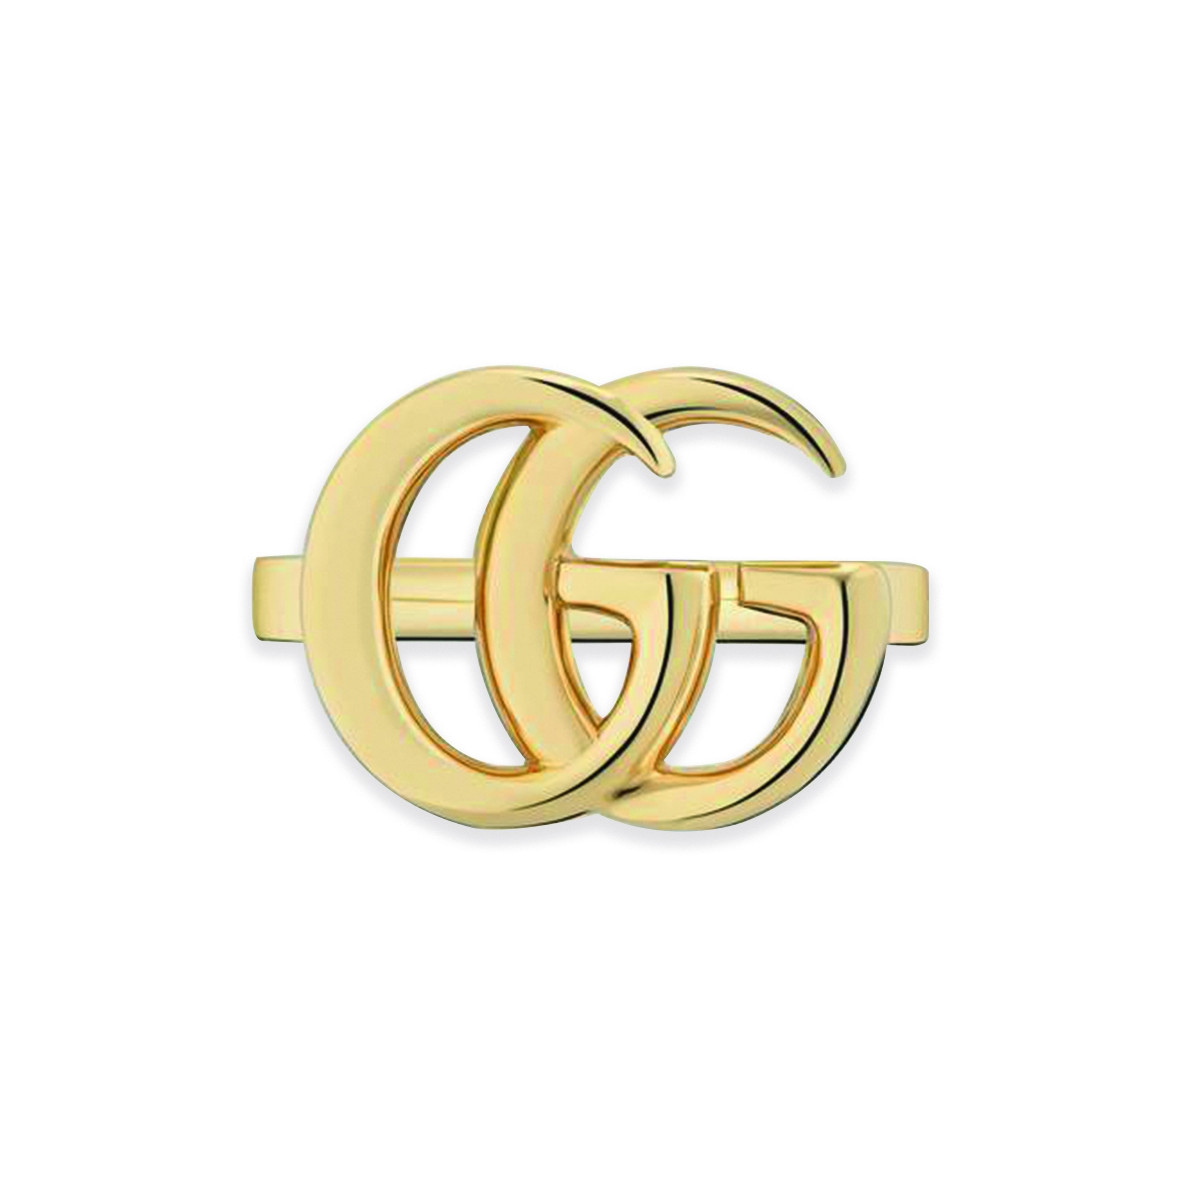 GUCCI GG RUNNING YELLOW GOLD RING 525686 J8500 8000 15